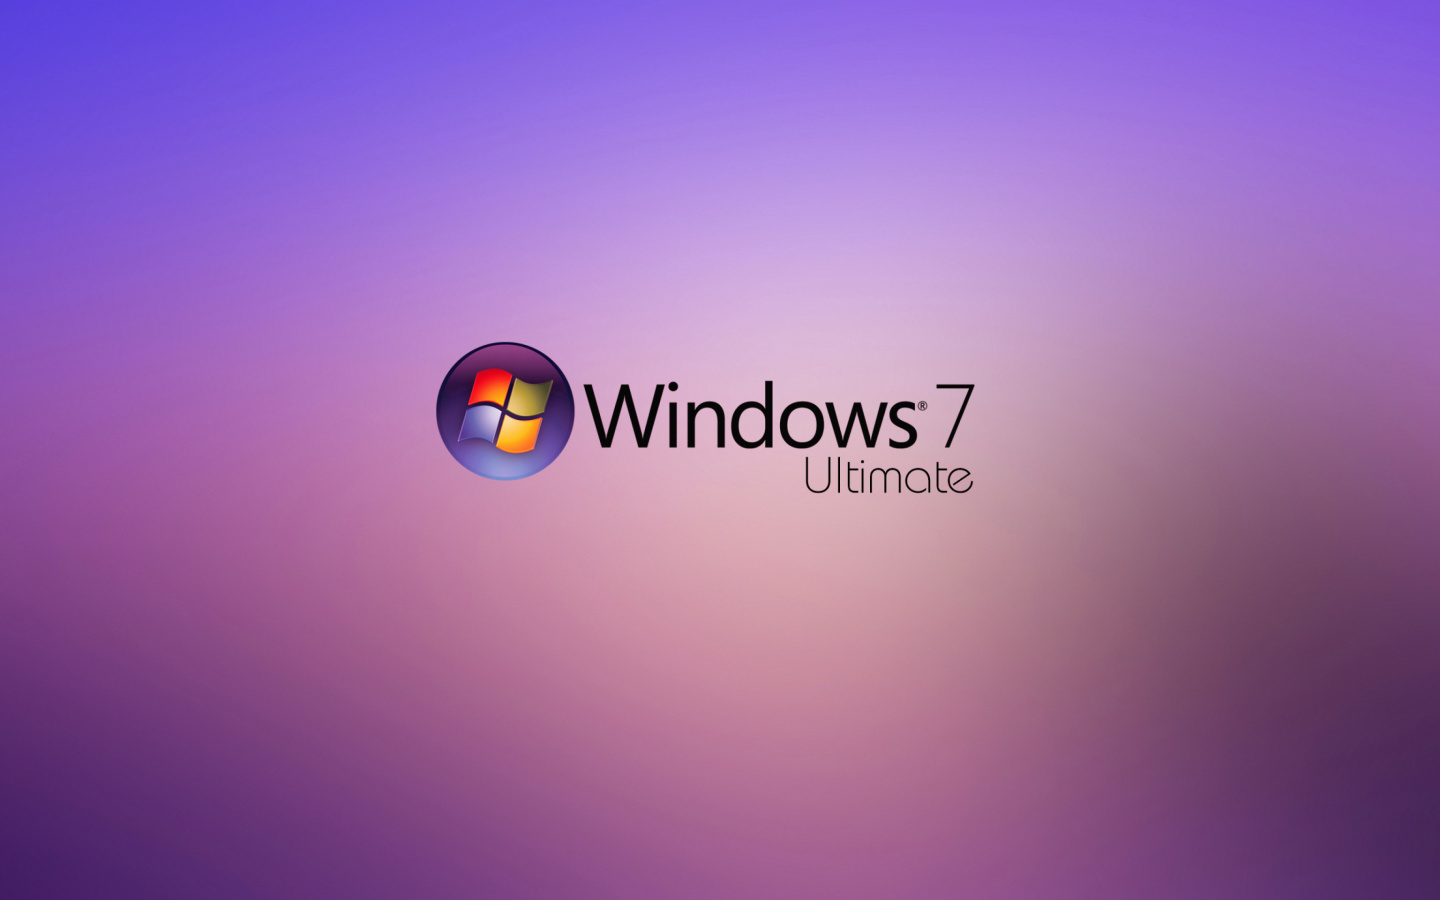 Windows 7 Ultimate wallpaper 1440x900